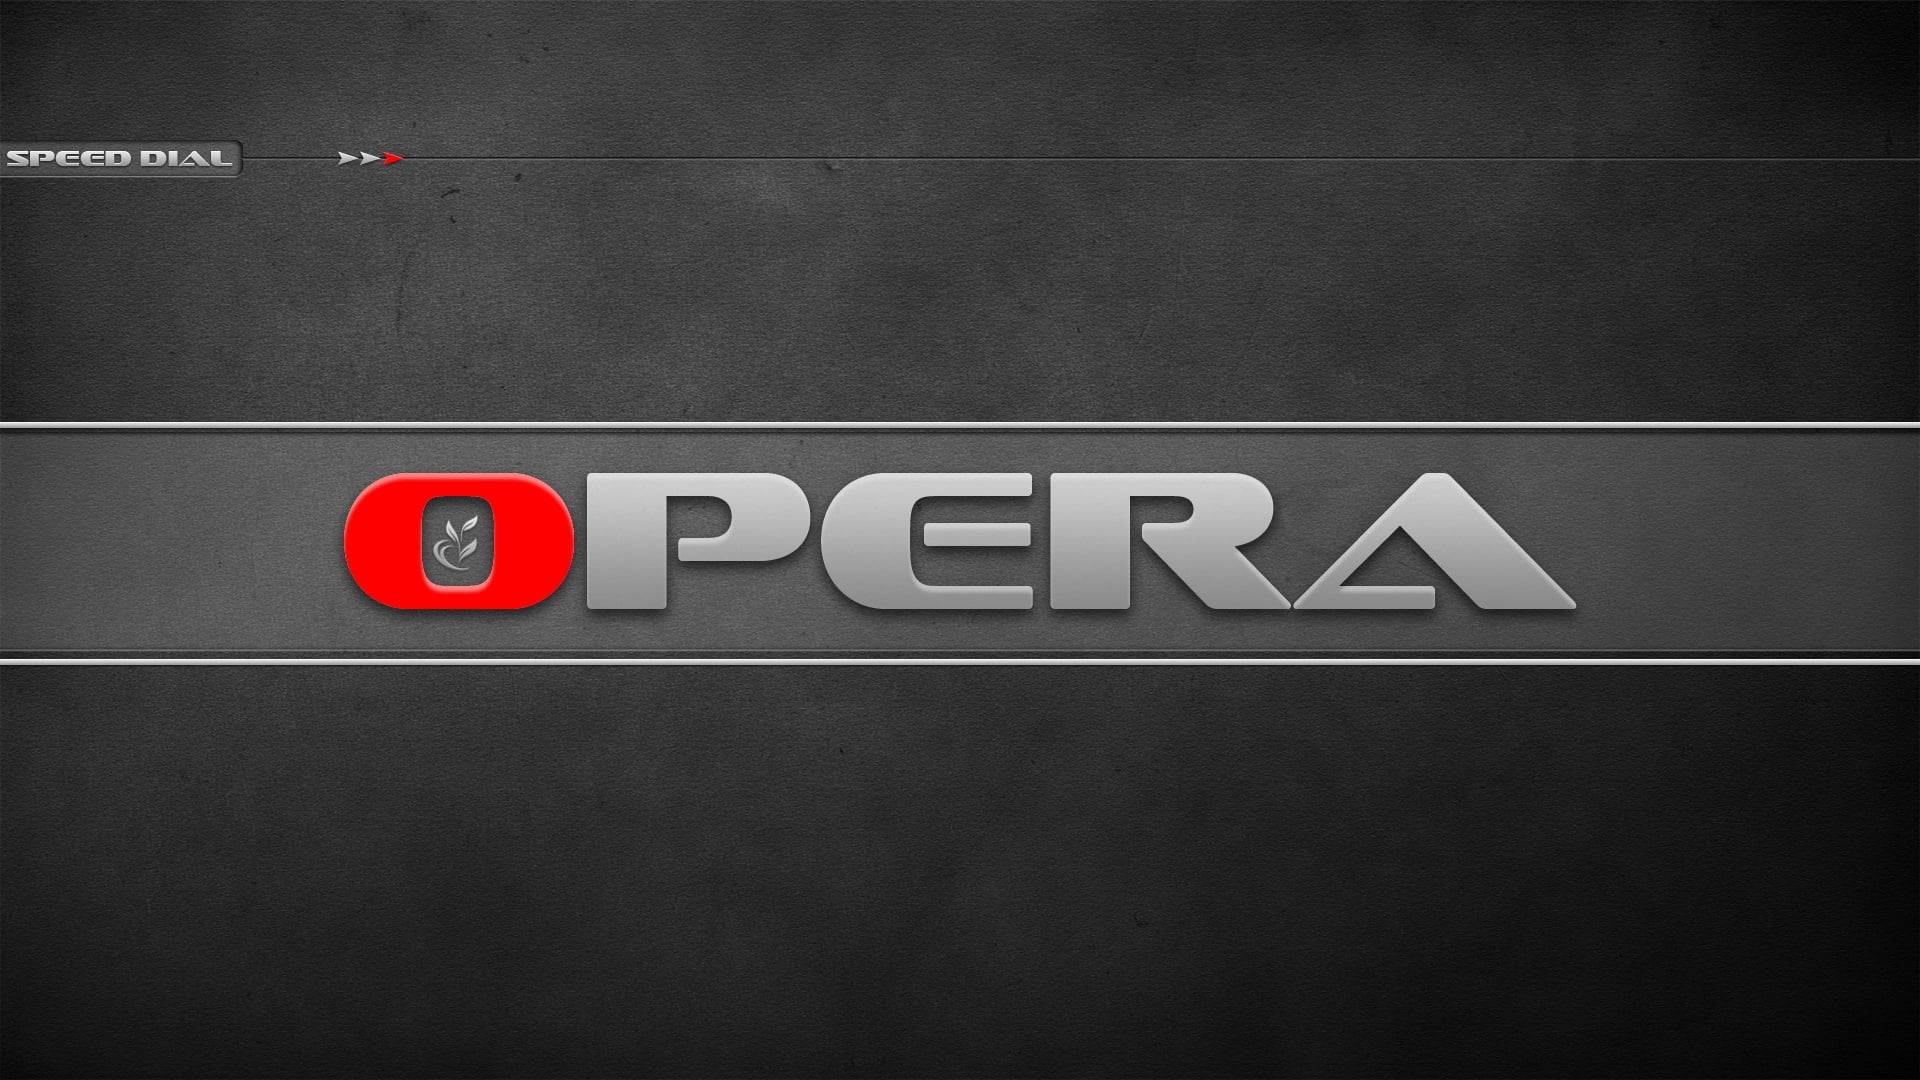 Opera logo, browser, red, gray, text, blackboard, single Word